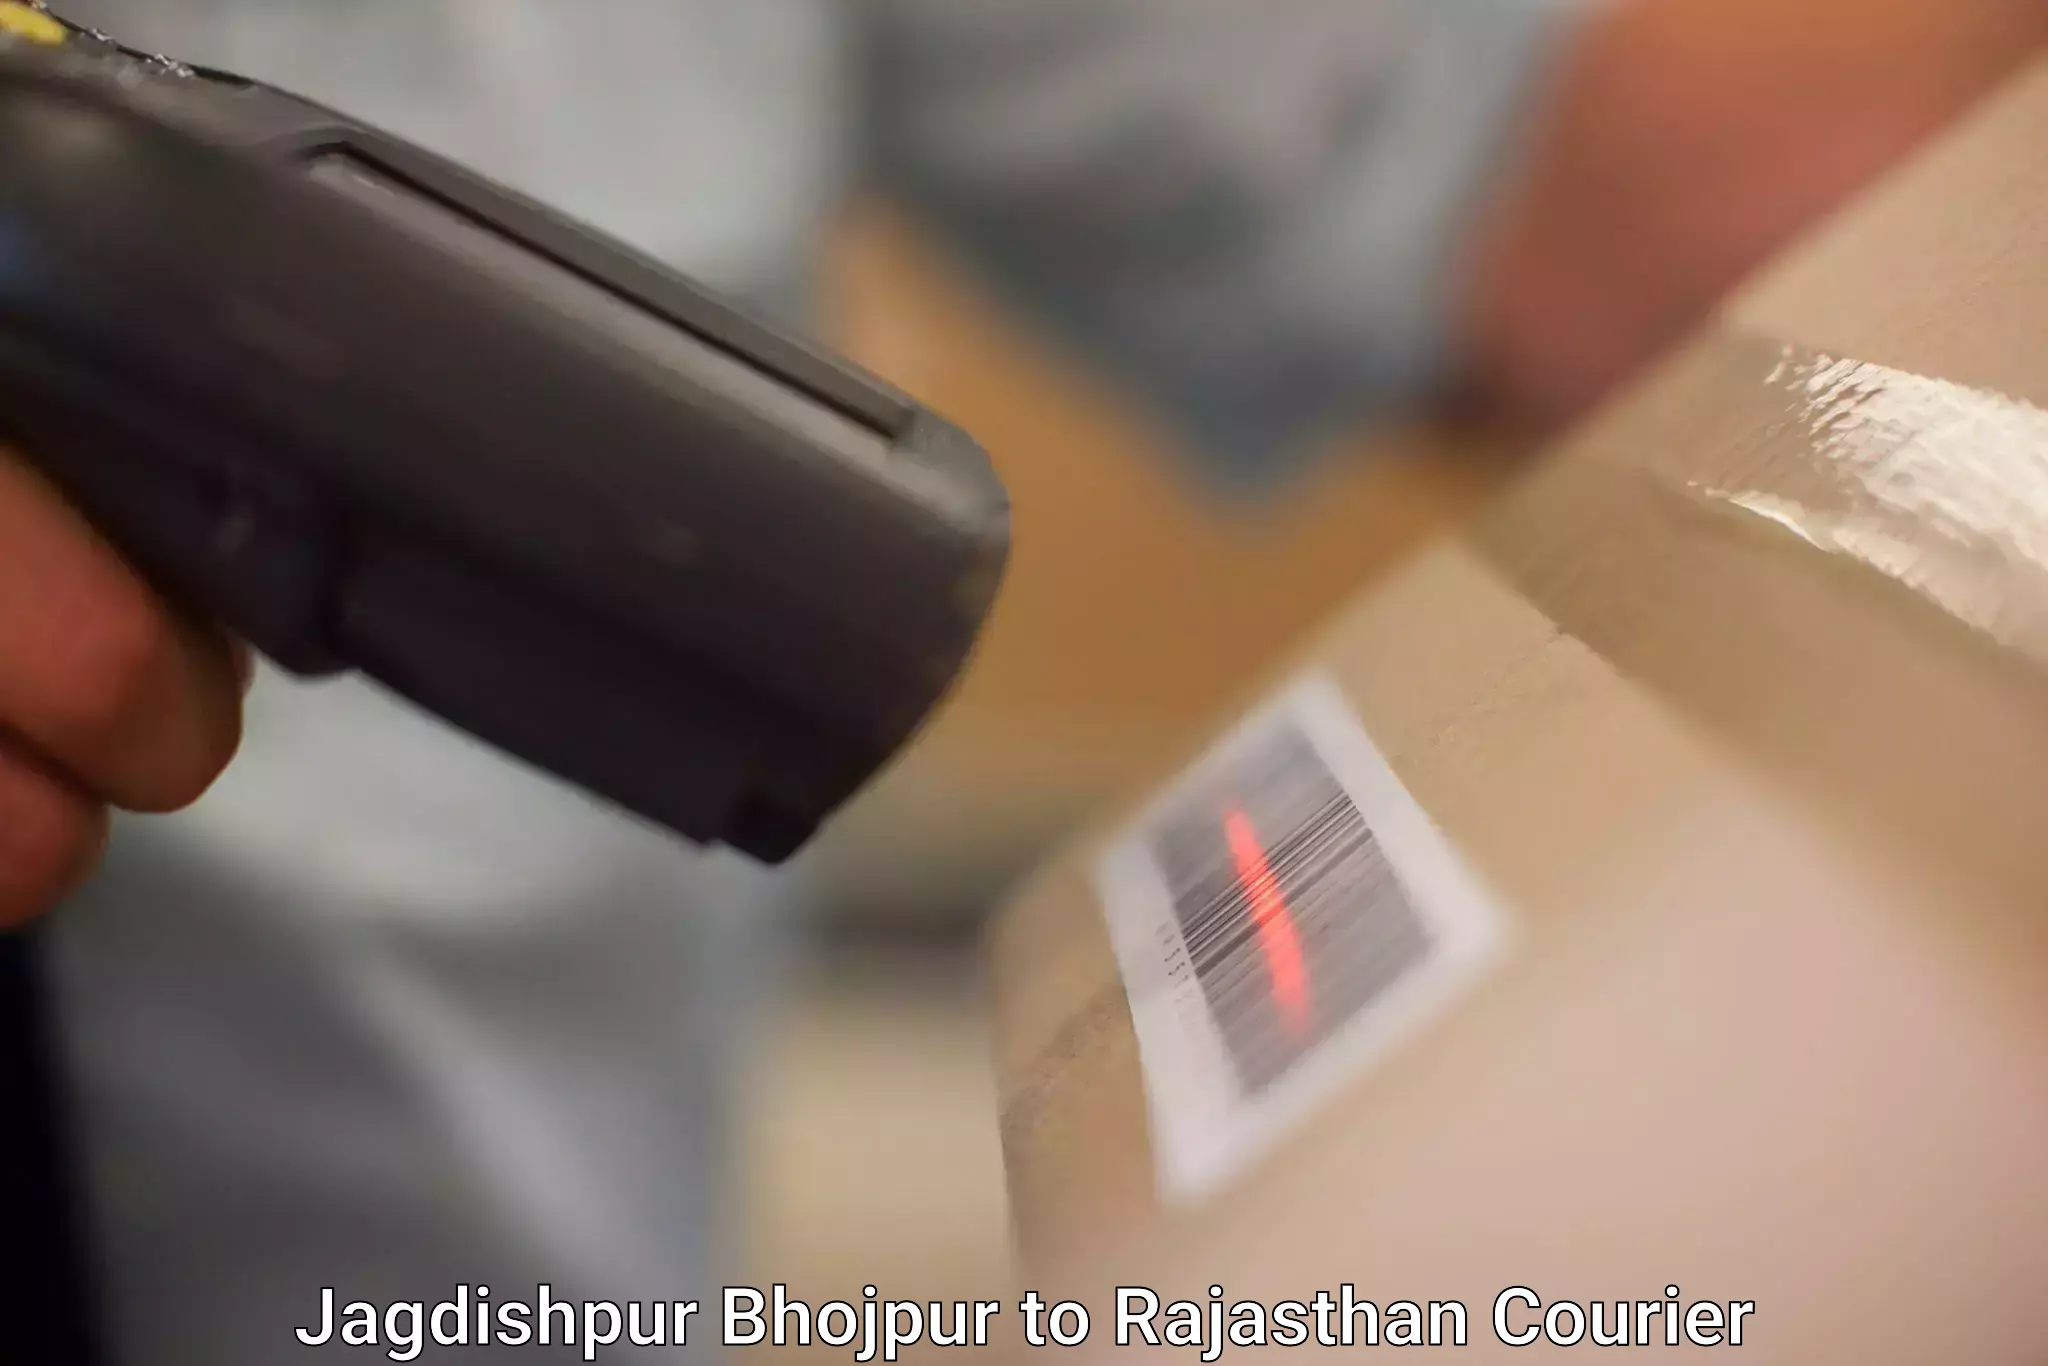 24/7 courier service Jagdishpur Bhojpur to Rajasthan